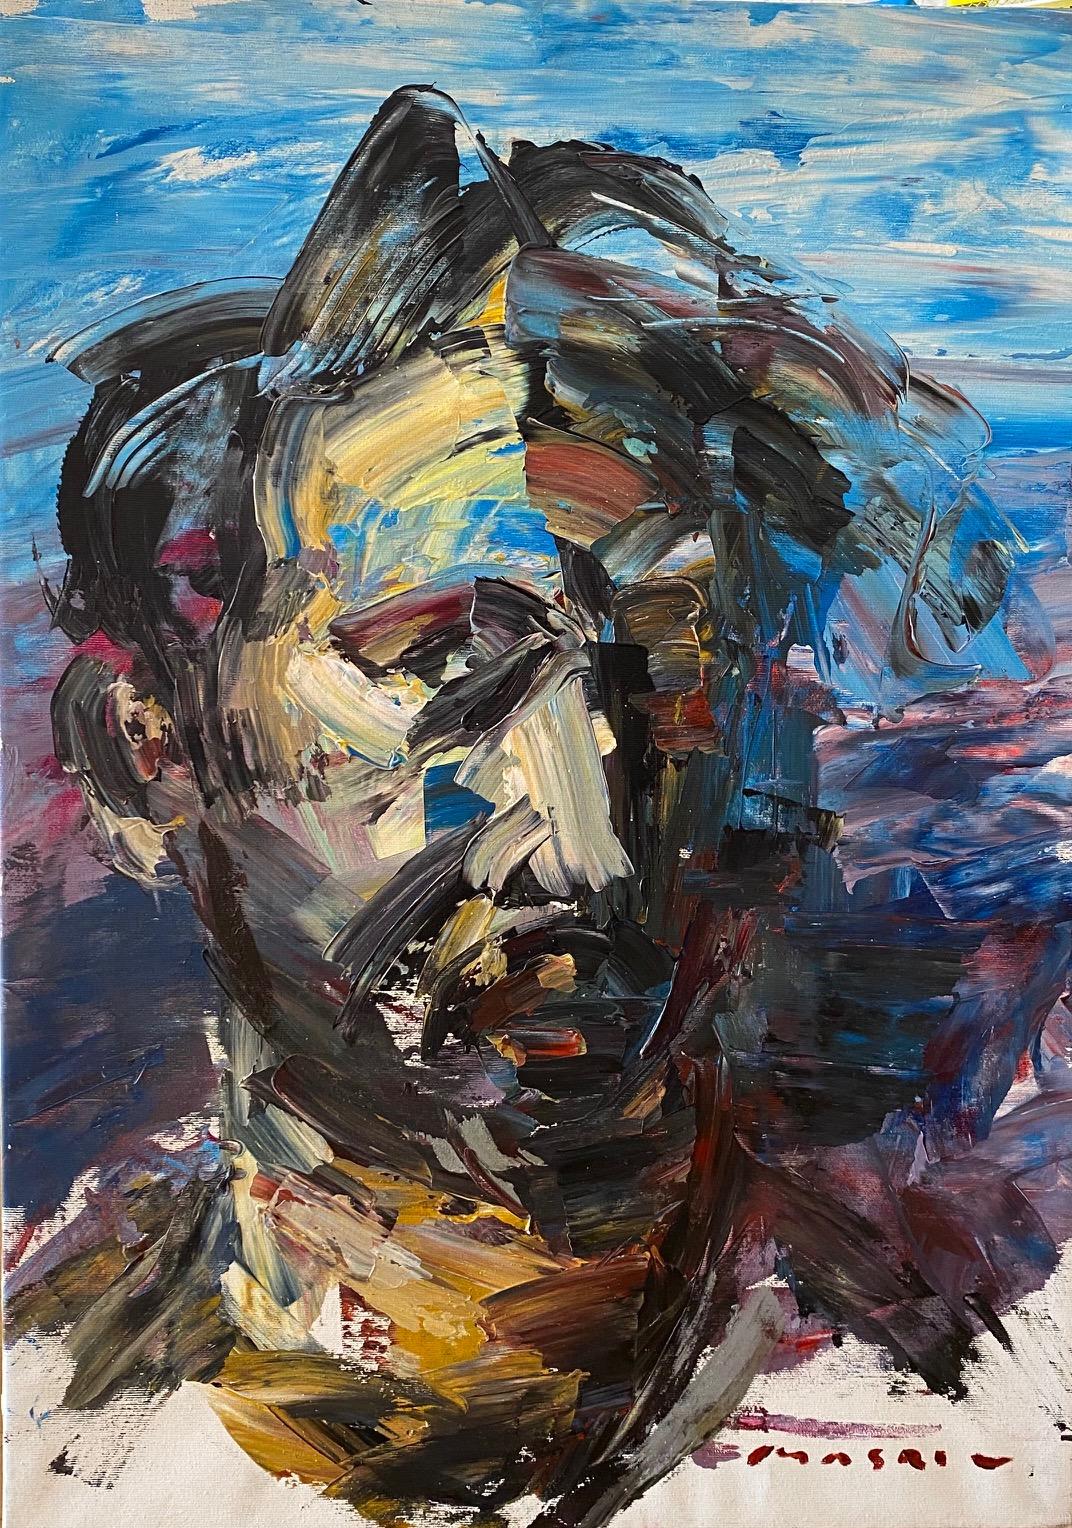 "Self Portrait 14" Oil on Canvas 20"x28" by Masri